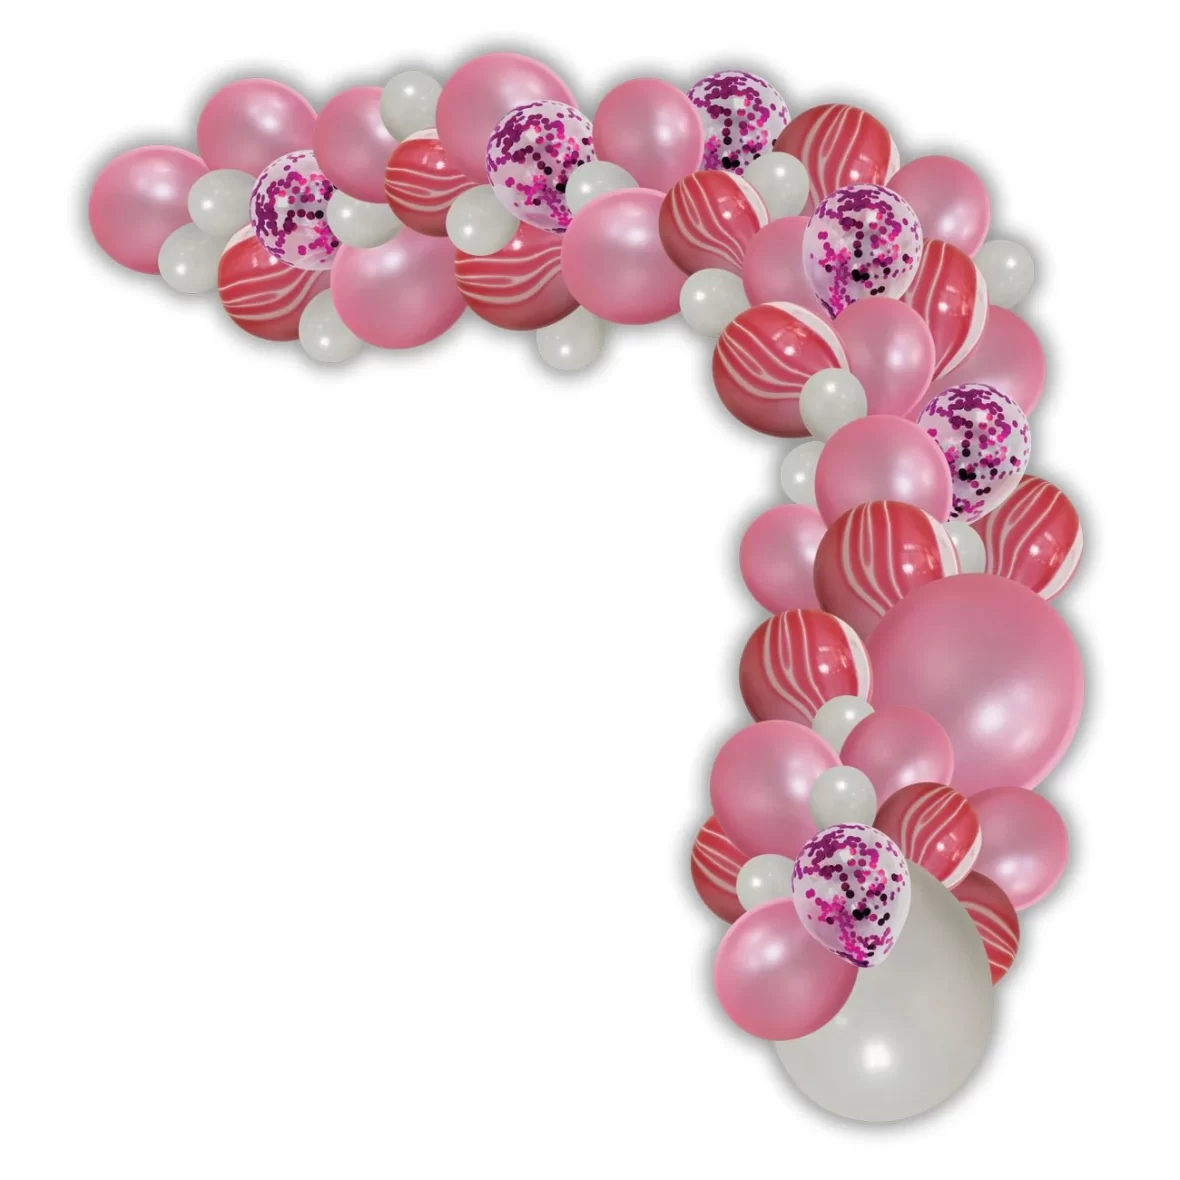 335-arcada-baloane-aniversare-petrecere-culori-roz-si-alb-cu-baloane-confetti-2-1